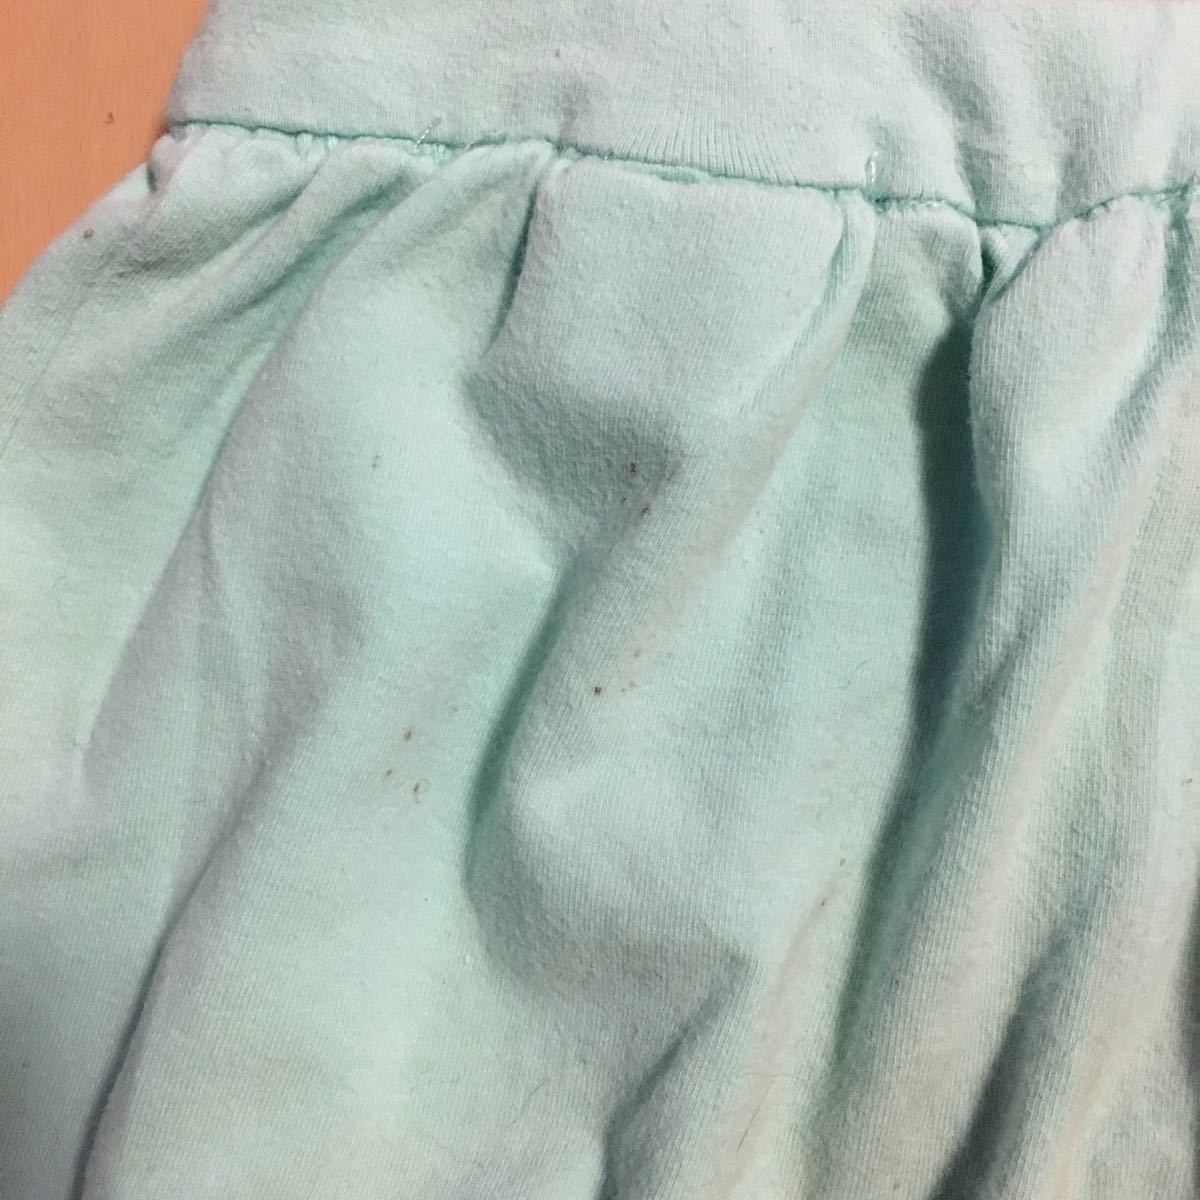  включая доставку kate spade Kate Spade шорты изумруд зеленый 68cm 6m 60-70cm бесплатная доставка 